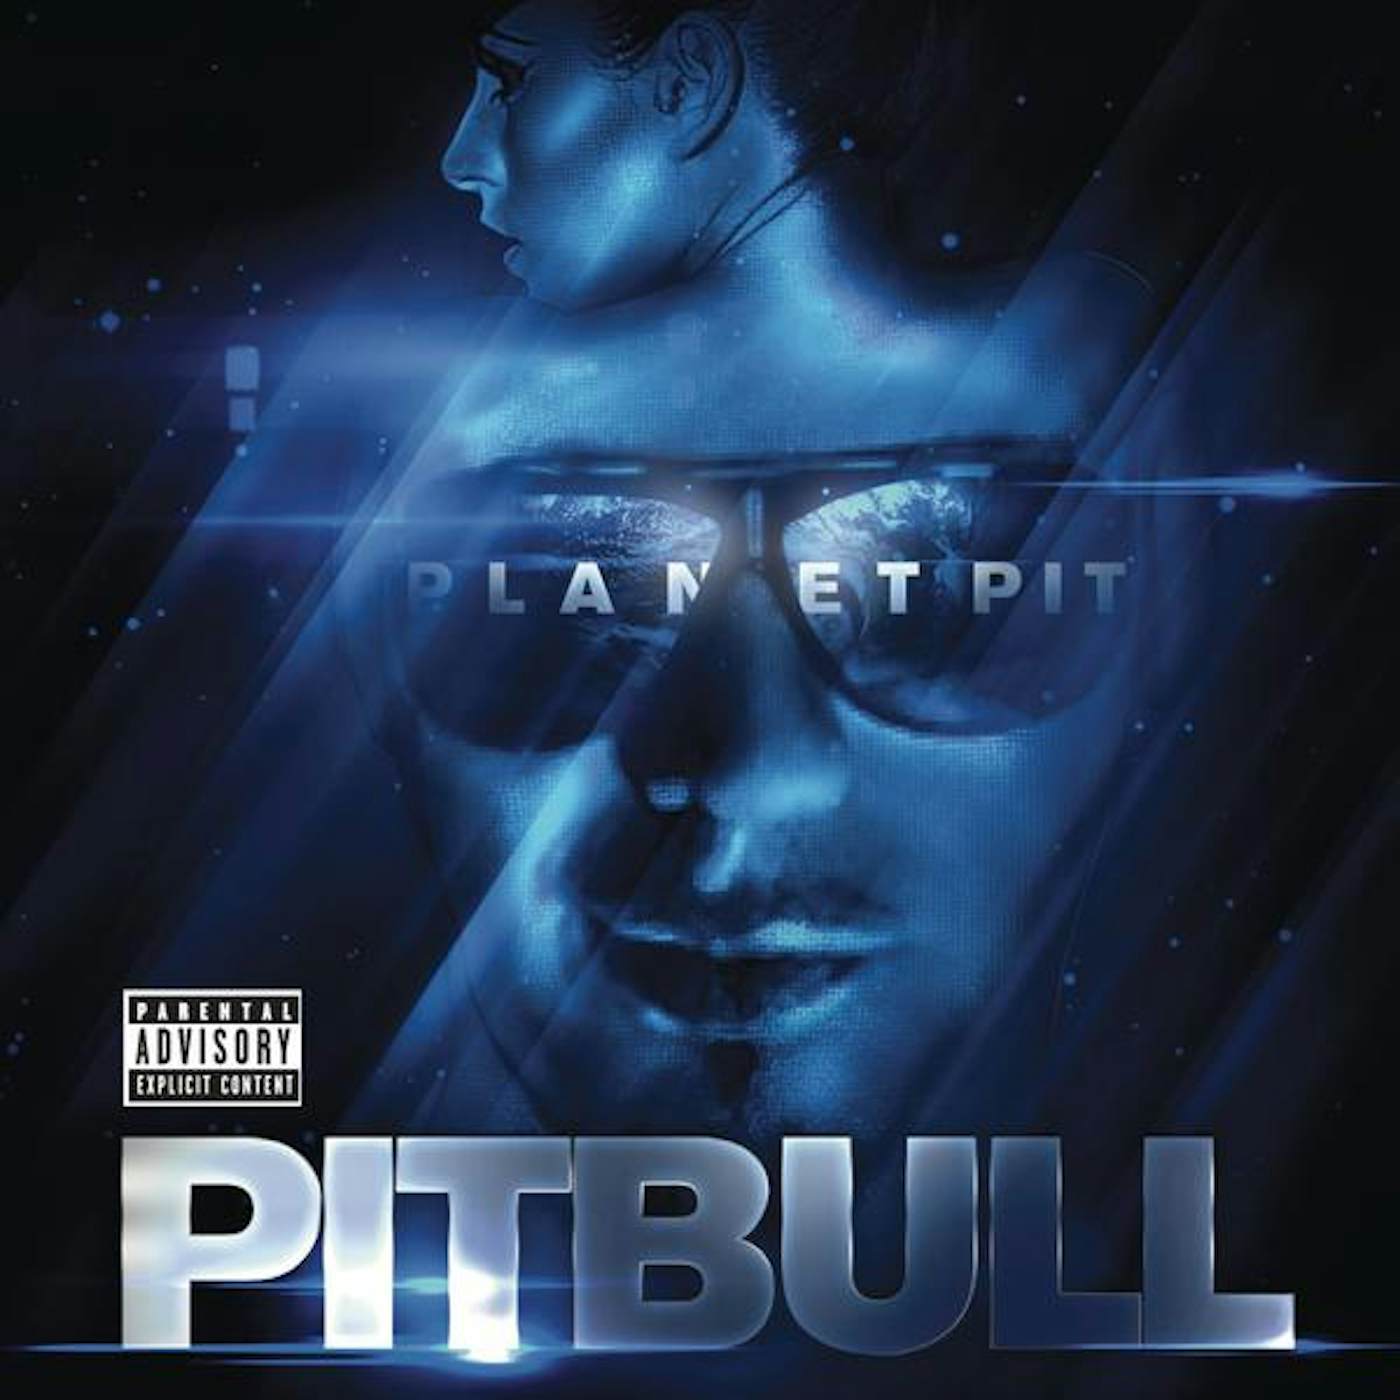 Pitbull PLANET PIT CD